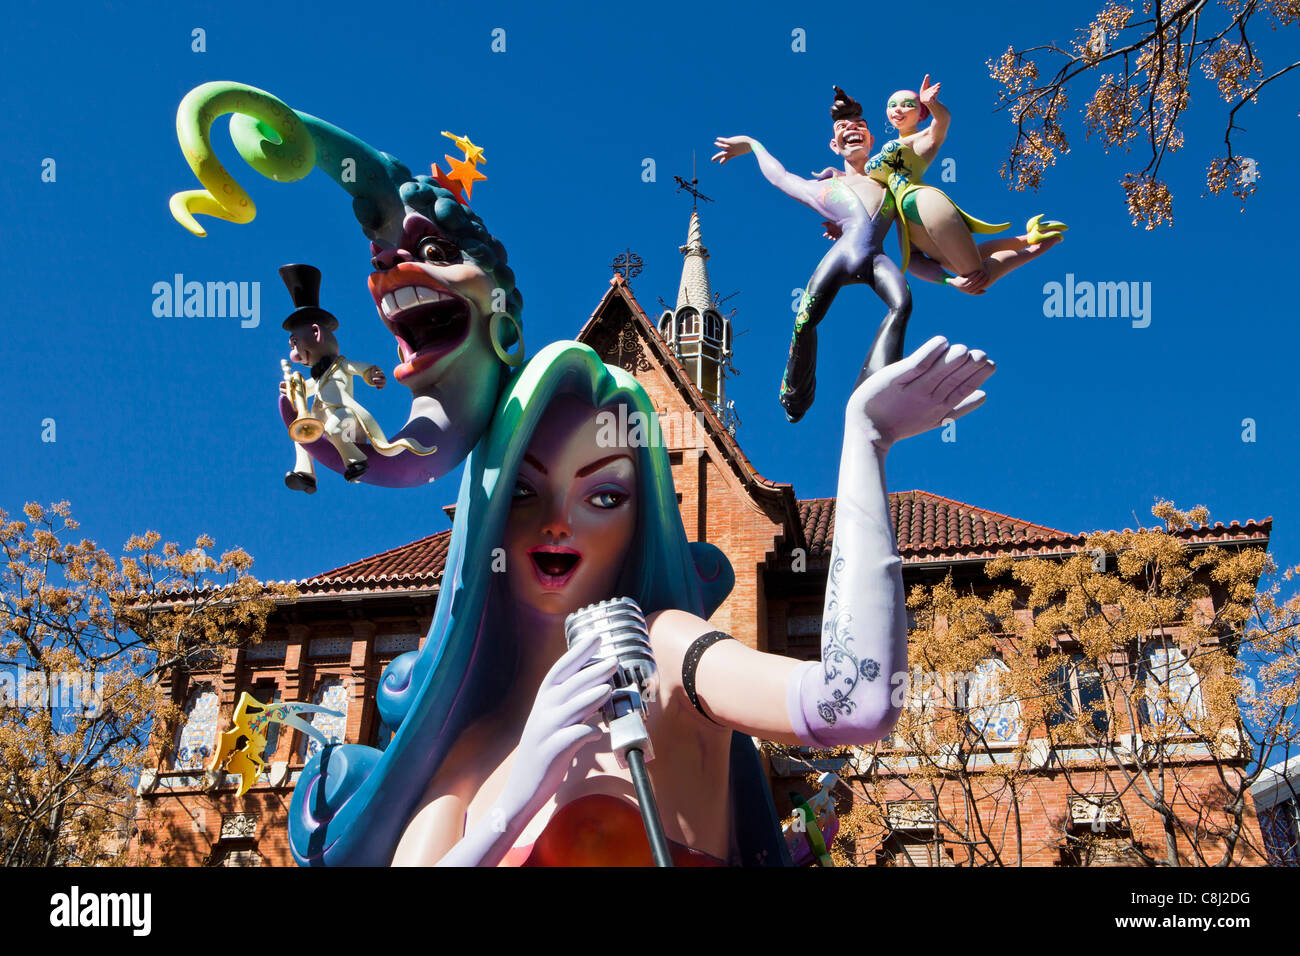 L'Espagne, l'Europe, Valence, l'art, grand, de couleur, de Falla, festival, l'imagination, les gens, la rue, Banque D'Images